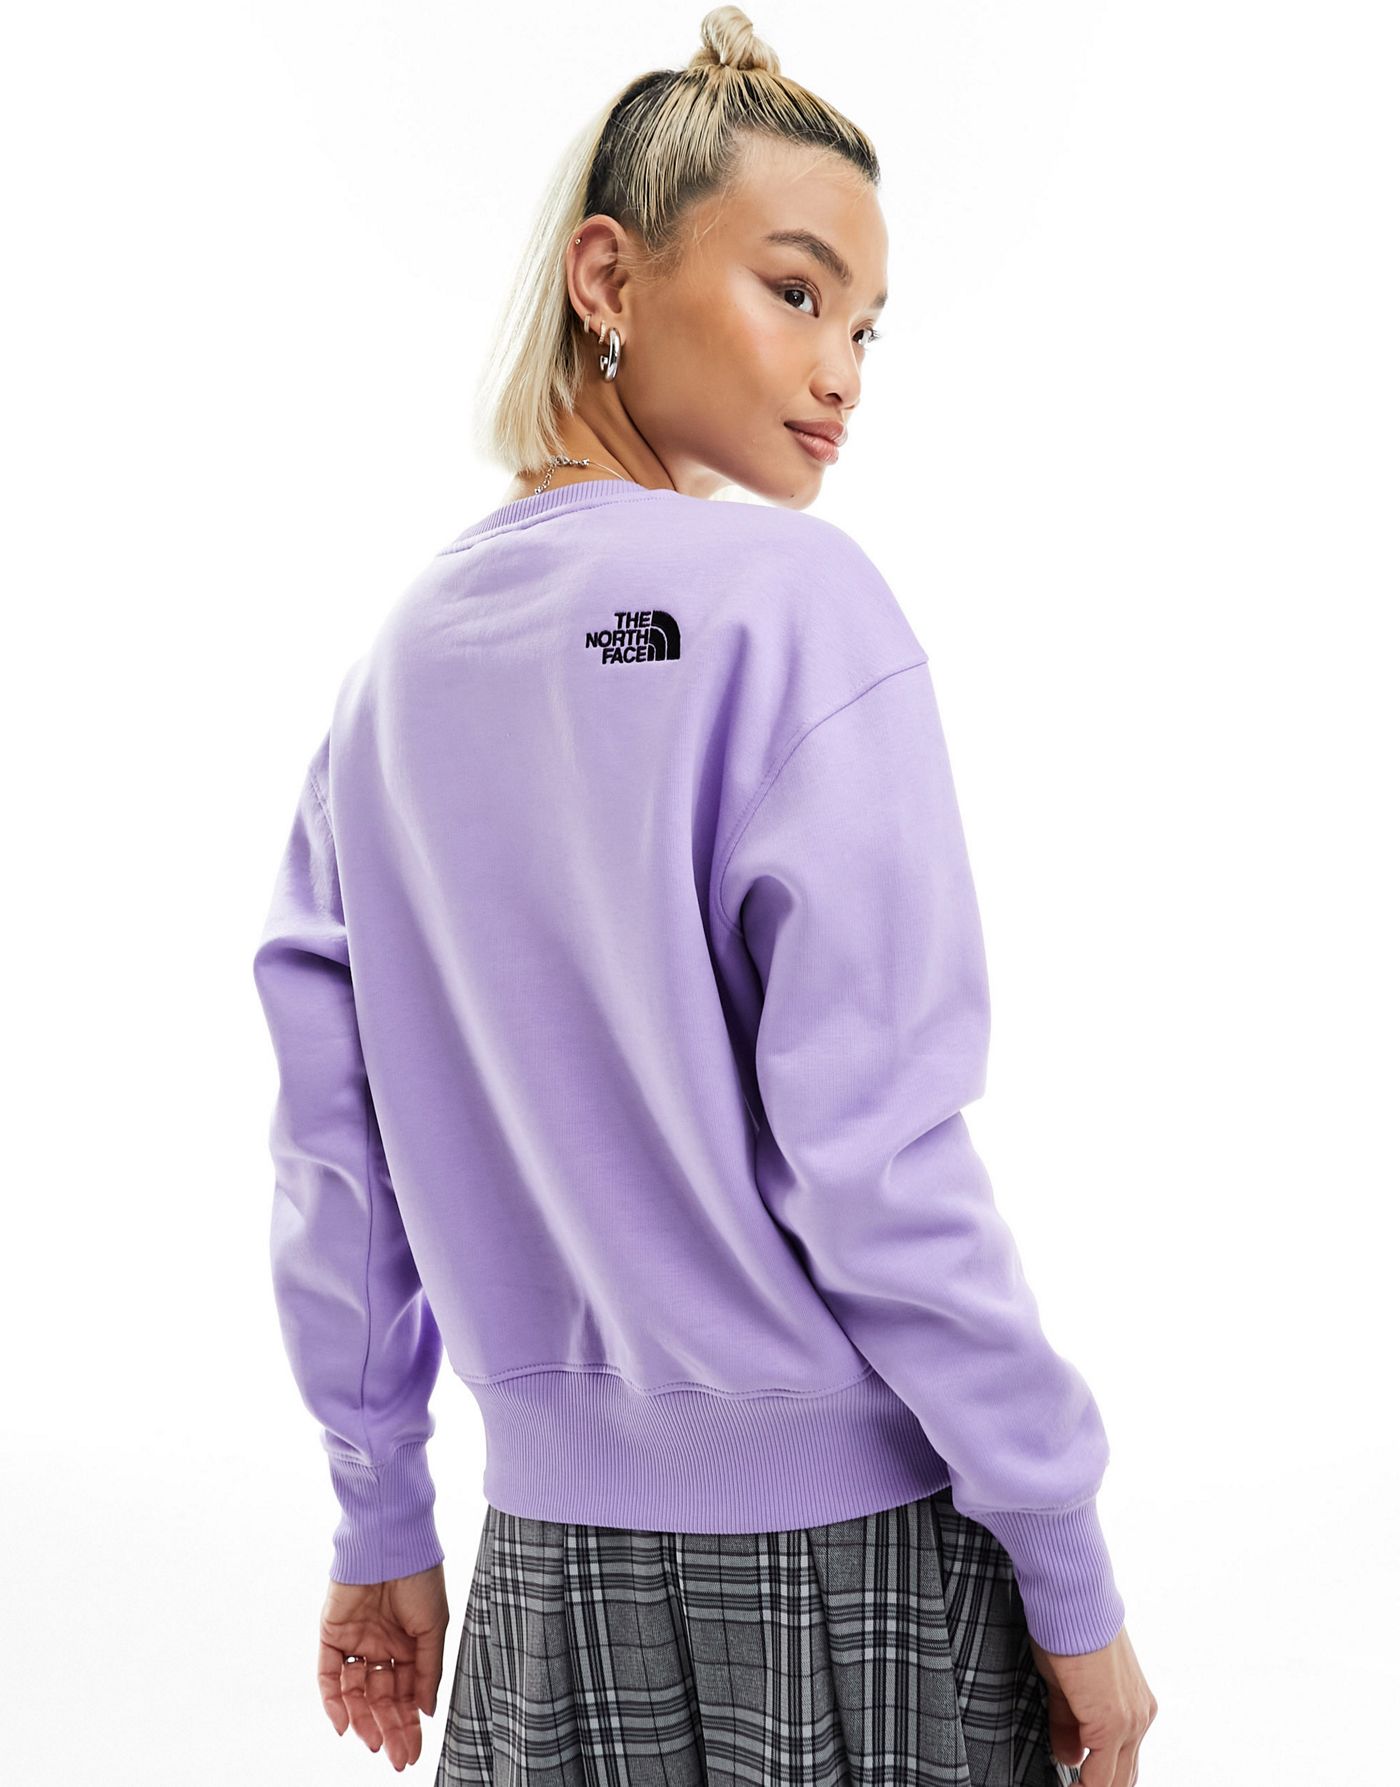 The North Face Essential oversized fleece sweatshirt in purple Exclusive at ASOS